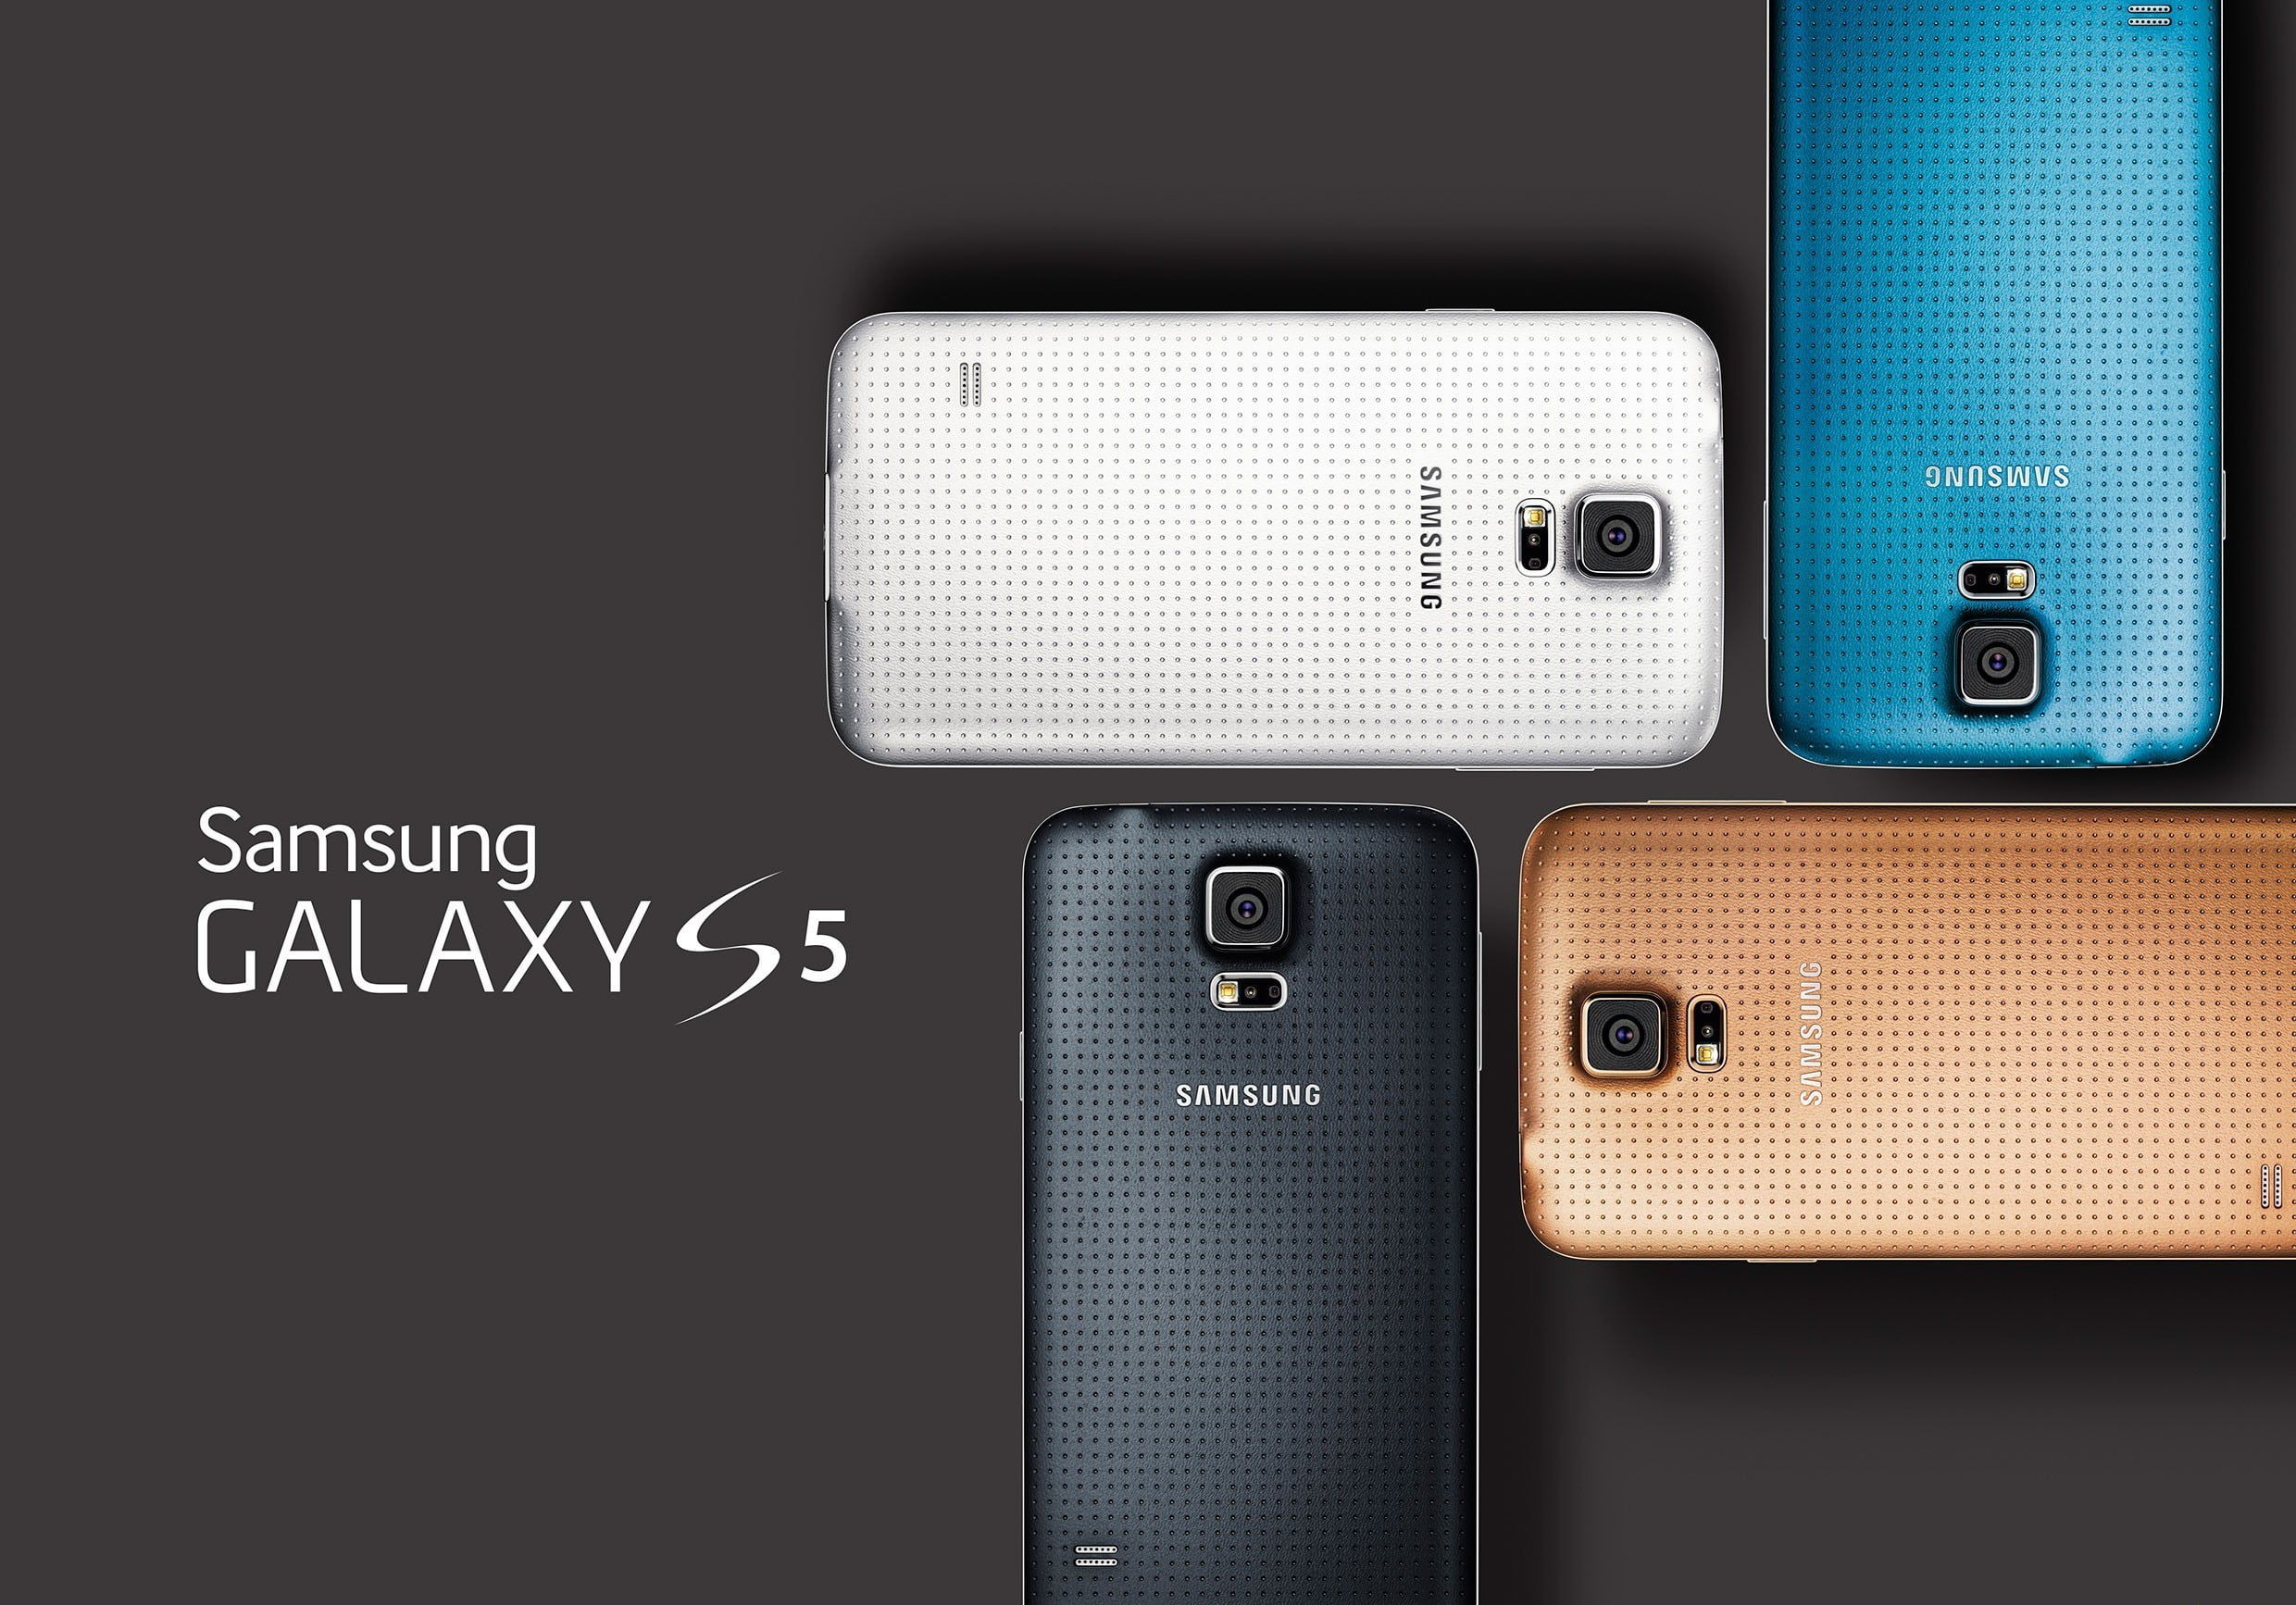 Samsung Galaxy S5 poster